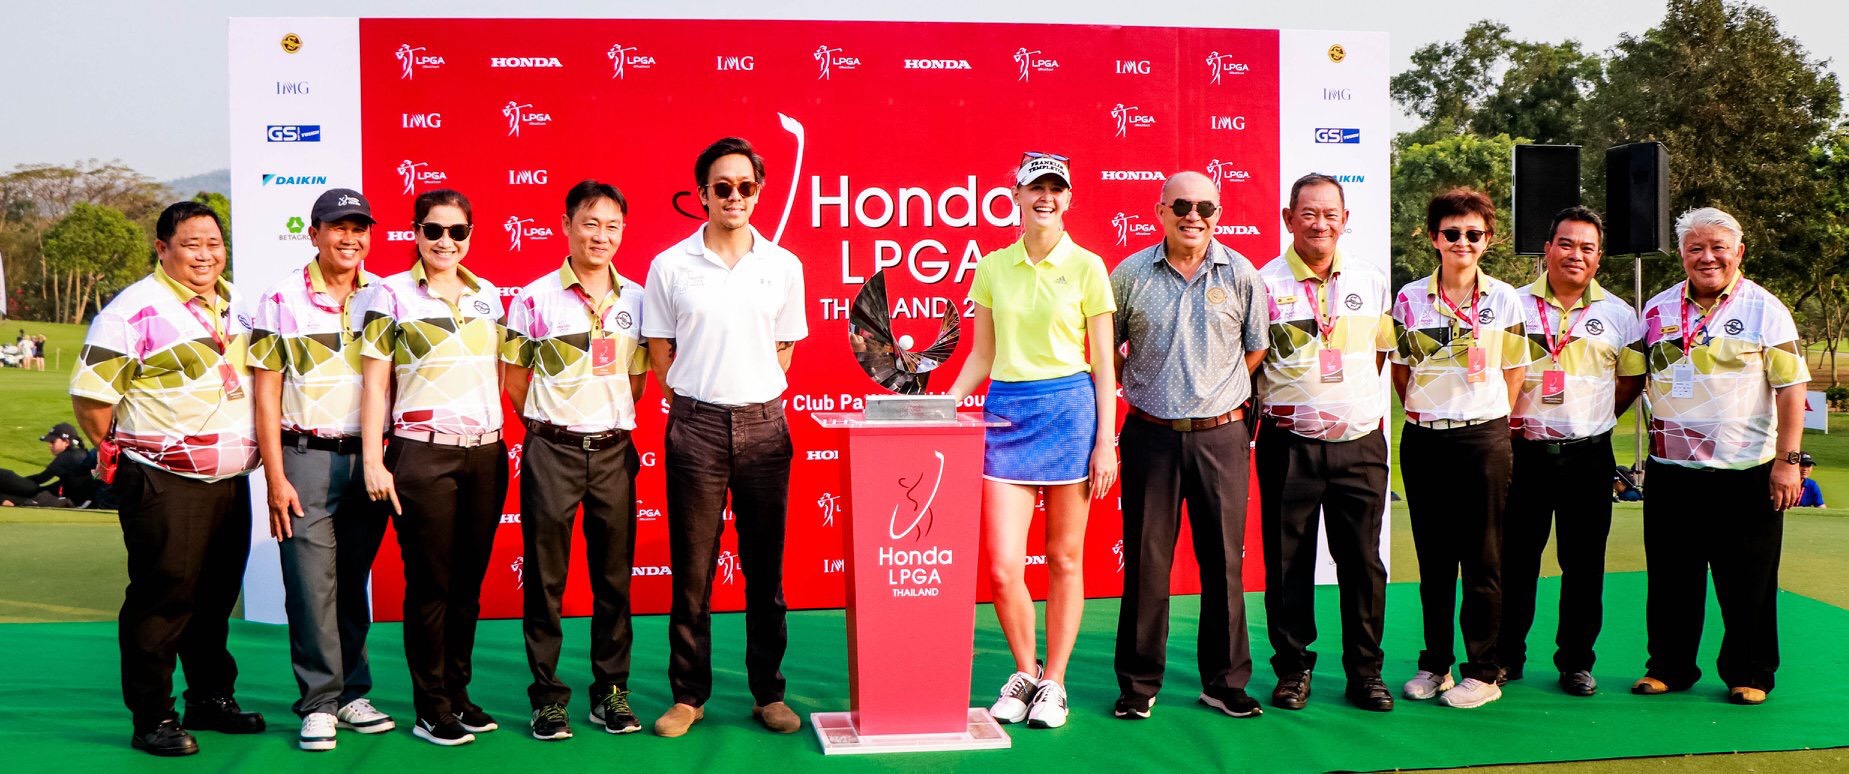 Honda LPGA 2018 Winner : Jessica Korda